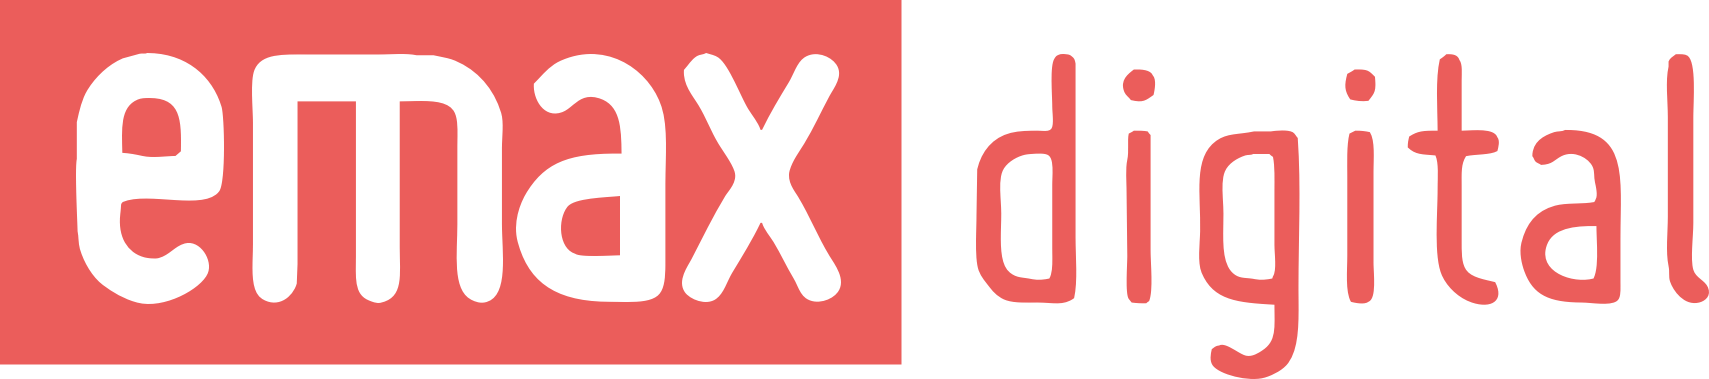 emax digital logo - horizontal - red transparent